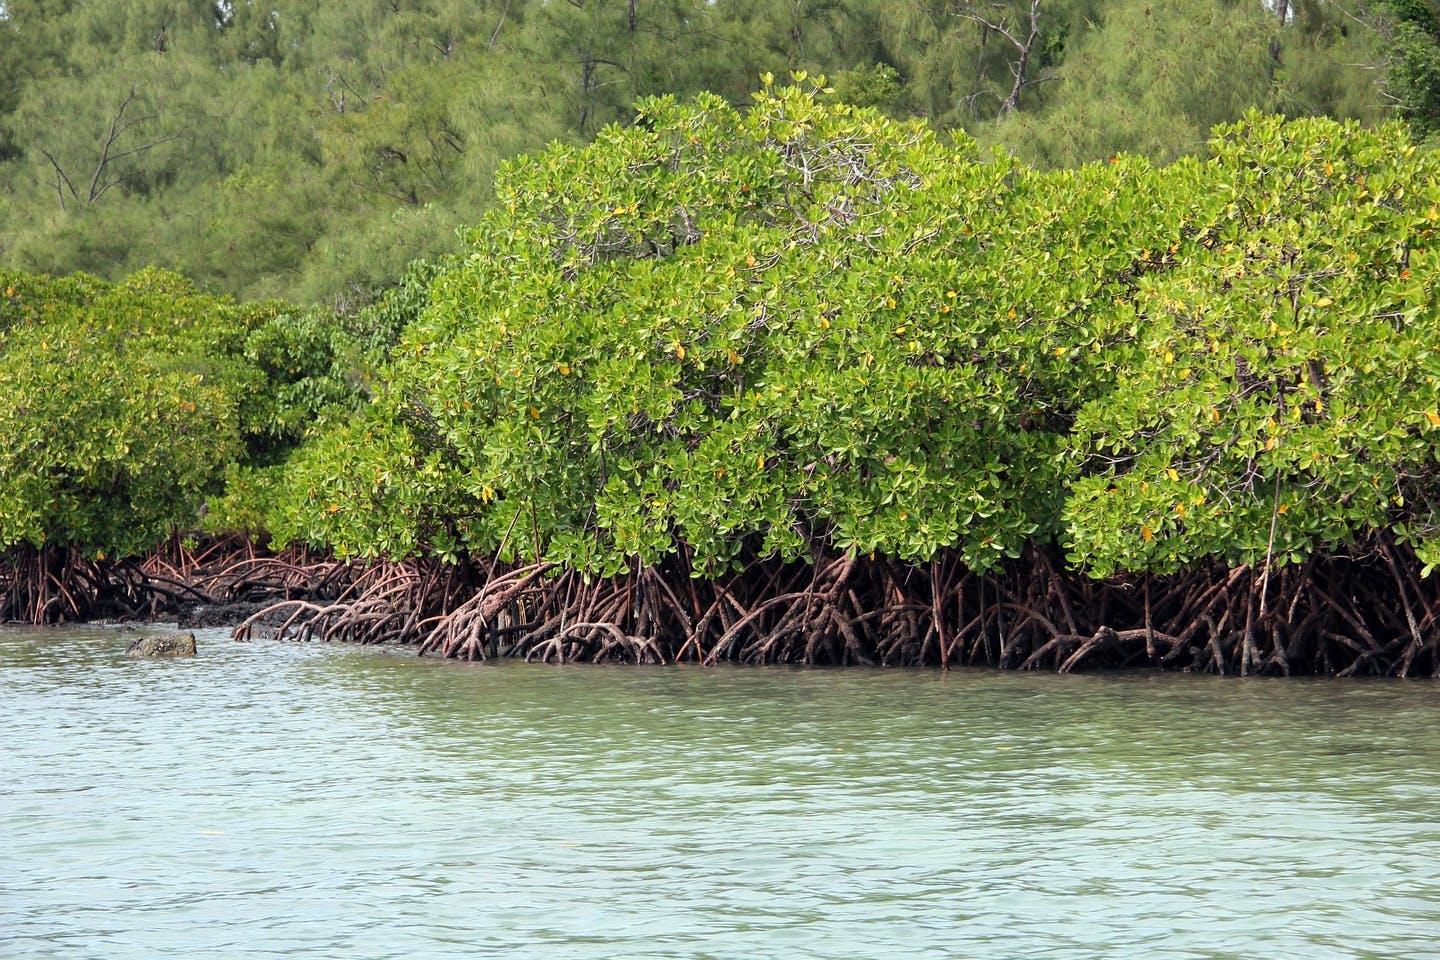 Mangroves Source: Pixabay